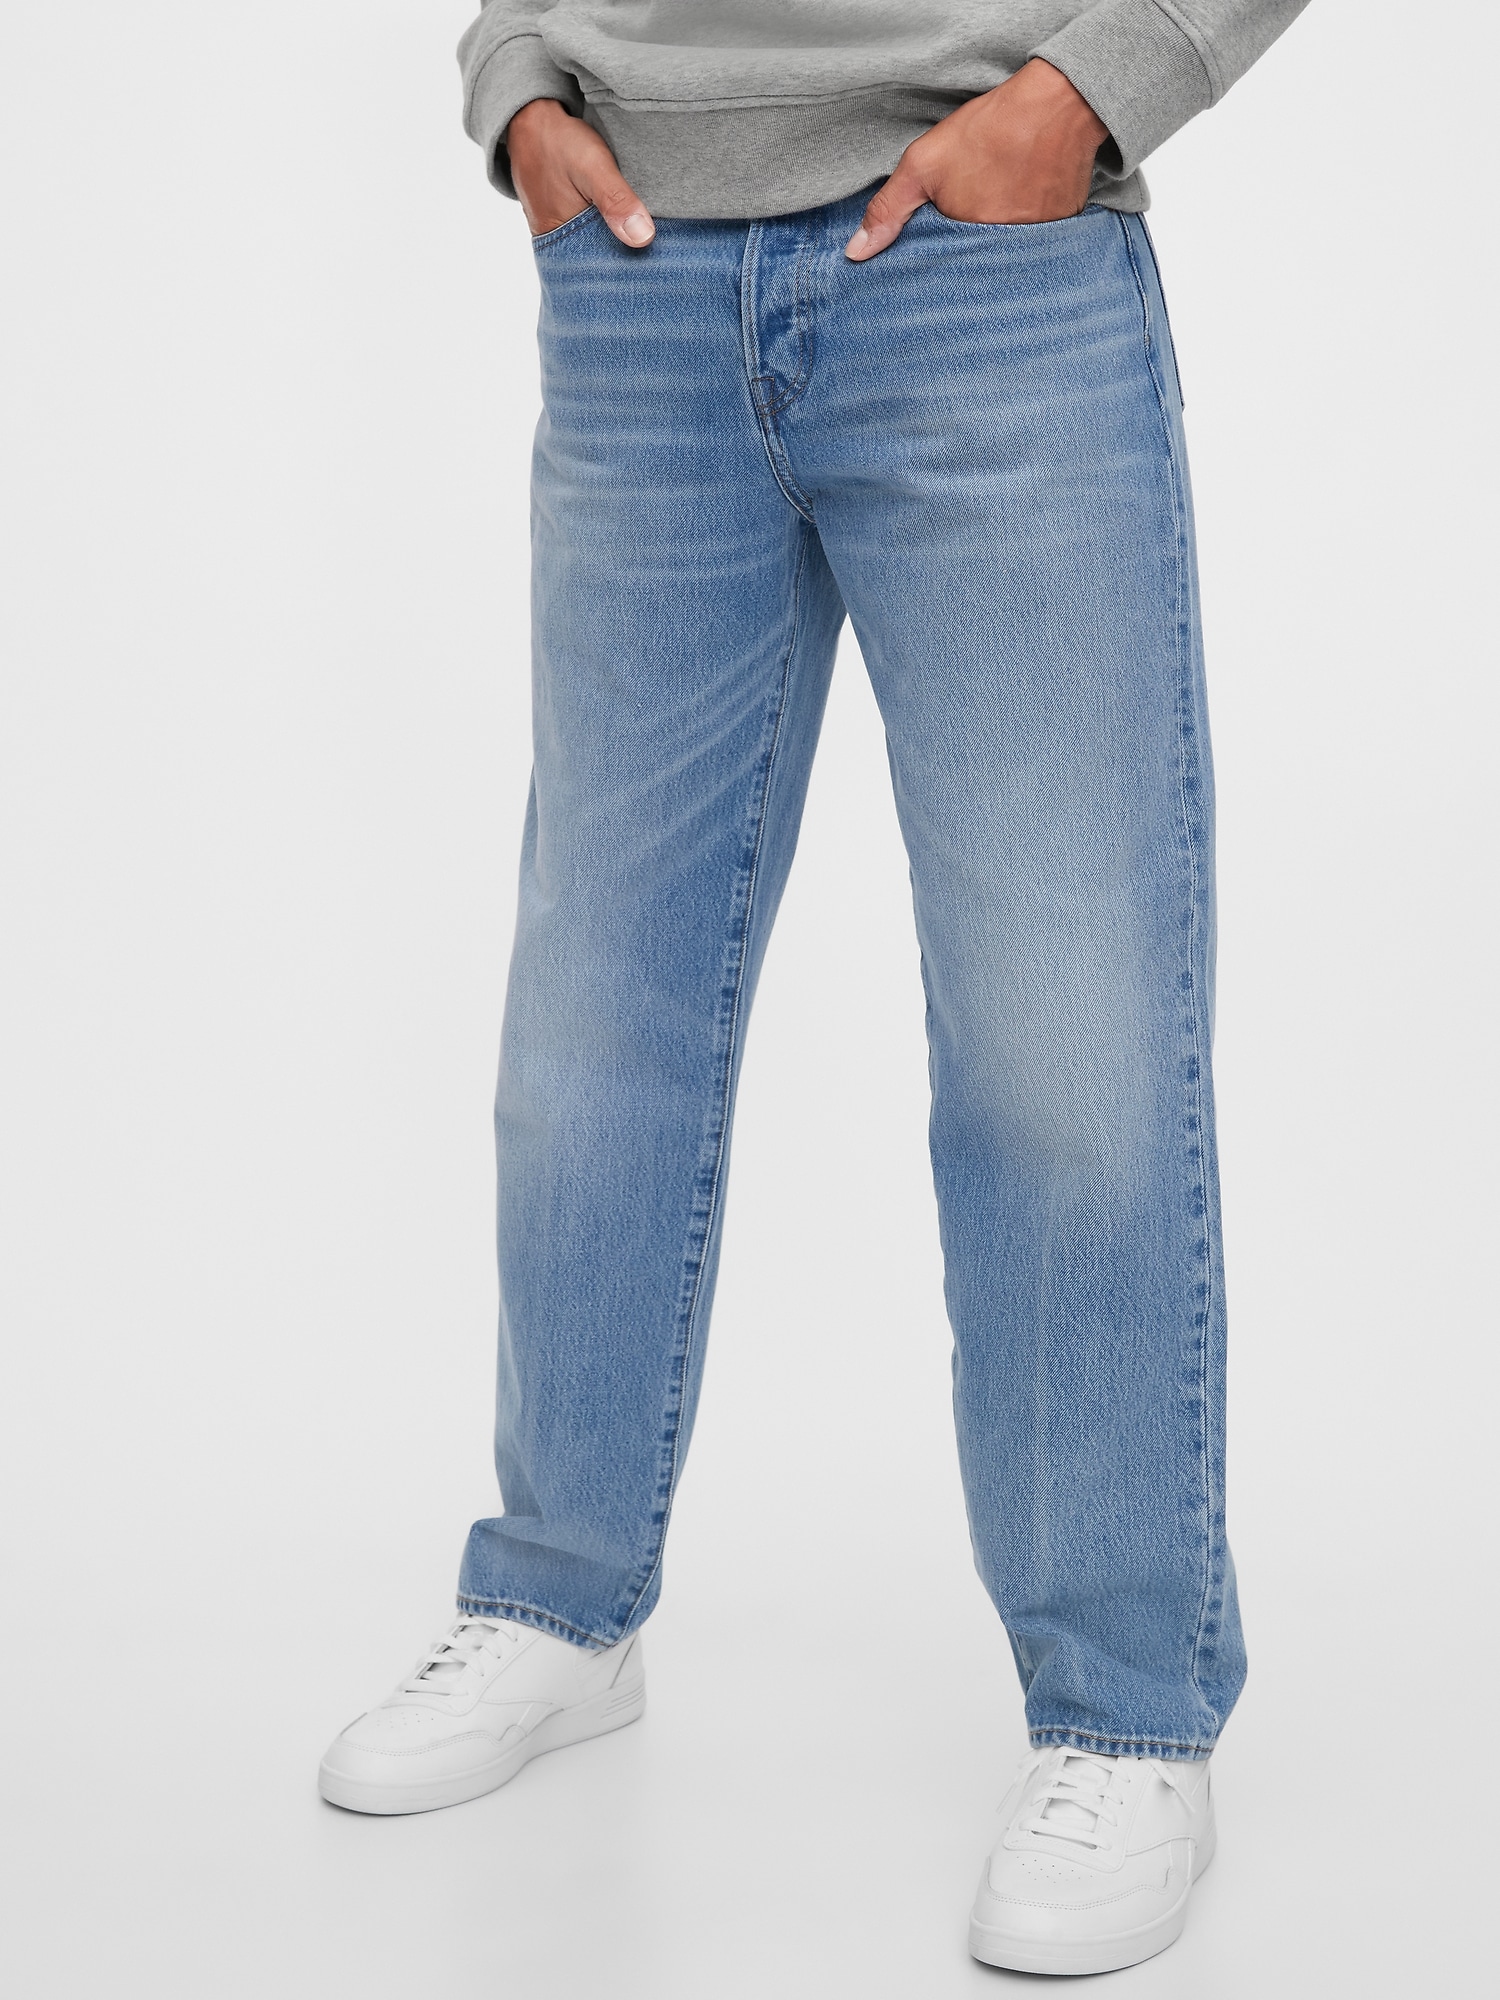 gap non stretch jeans